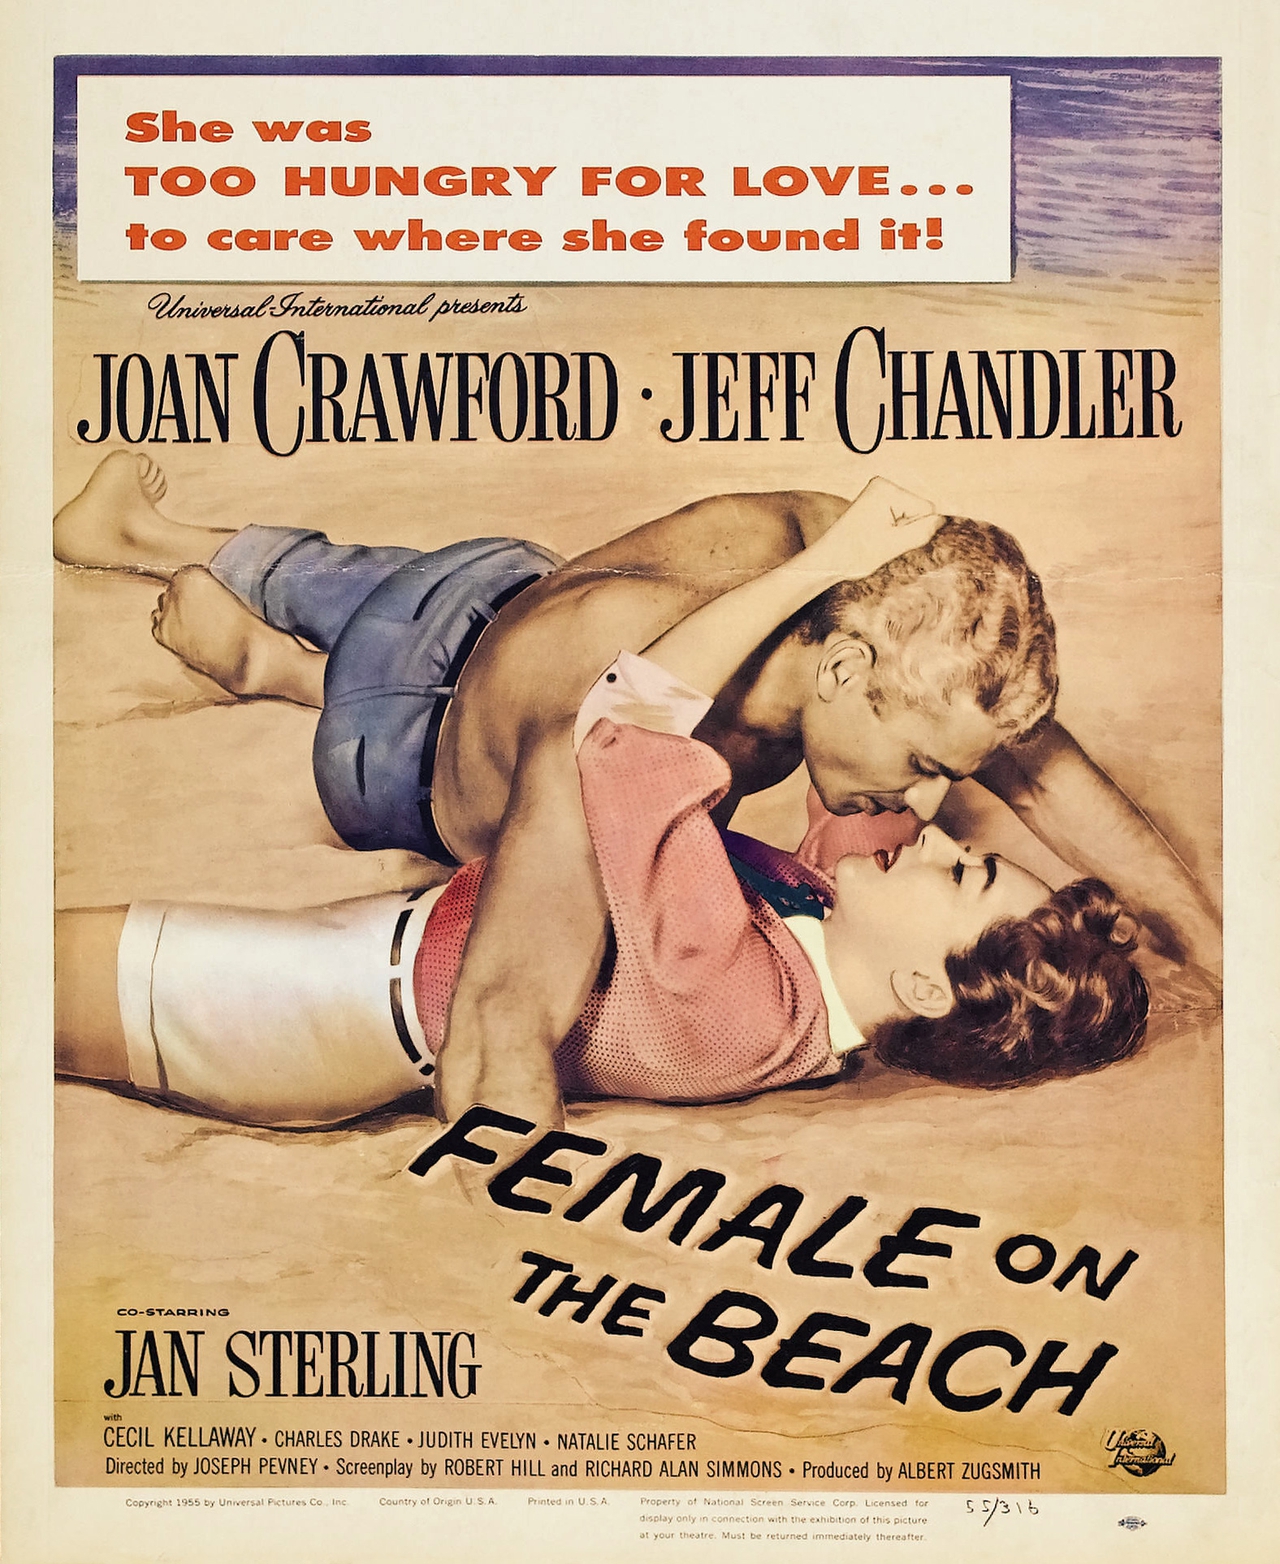 Jeff Chandler در صحنه فیلم سینمایی Female on the Beach به همراه Joan Crawford